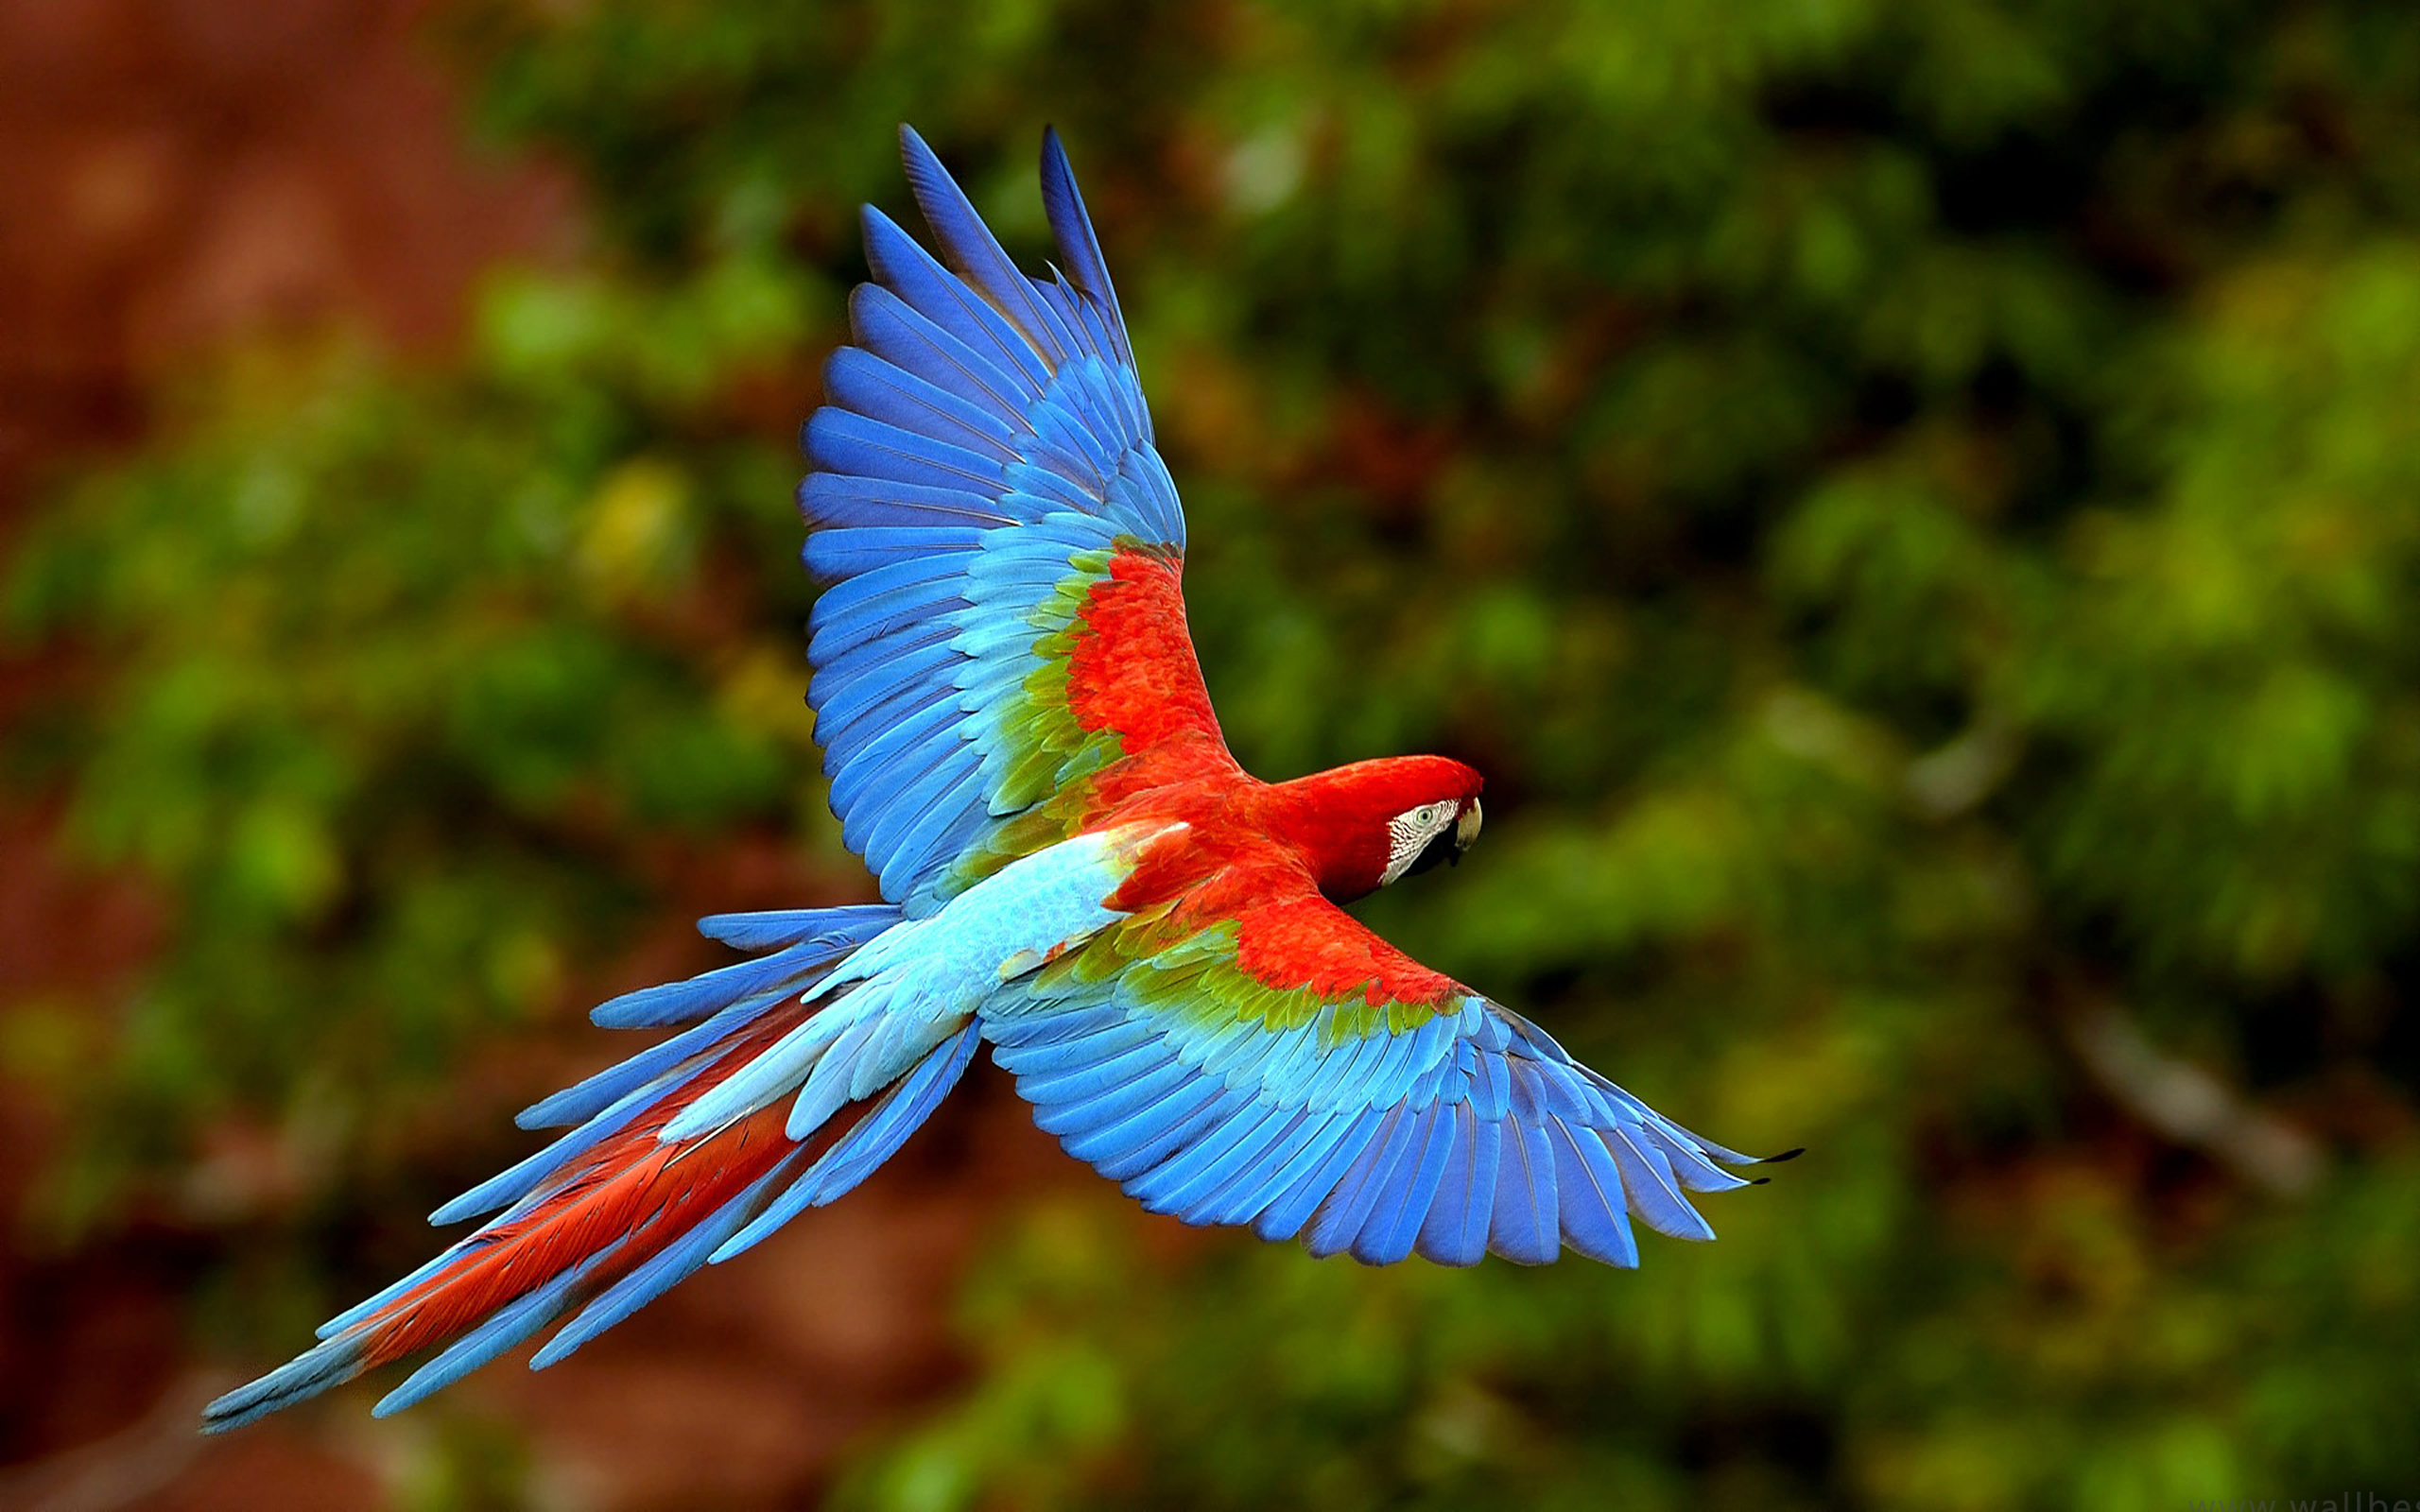 Parrot High Definition Animal Flying 2560x1600 Pixel 2 Mb Jpg